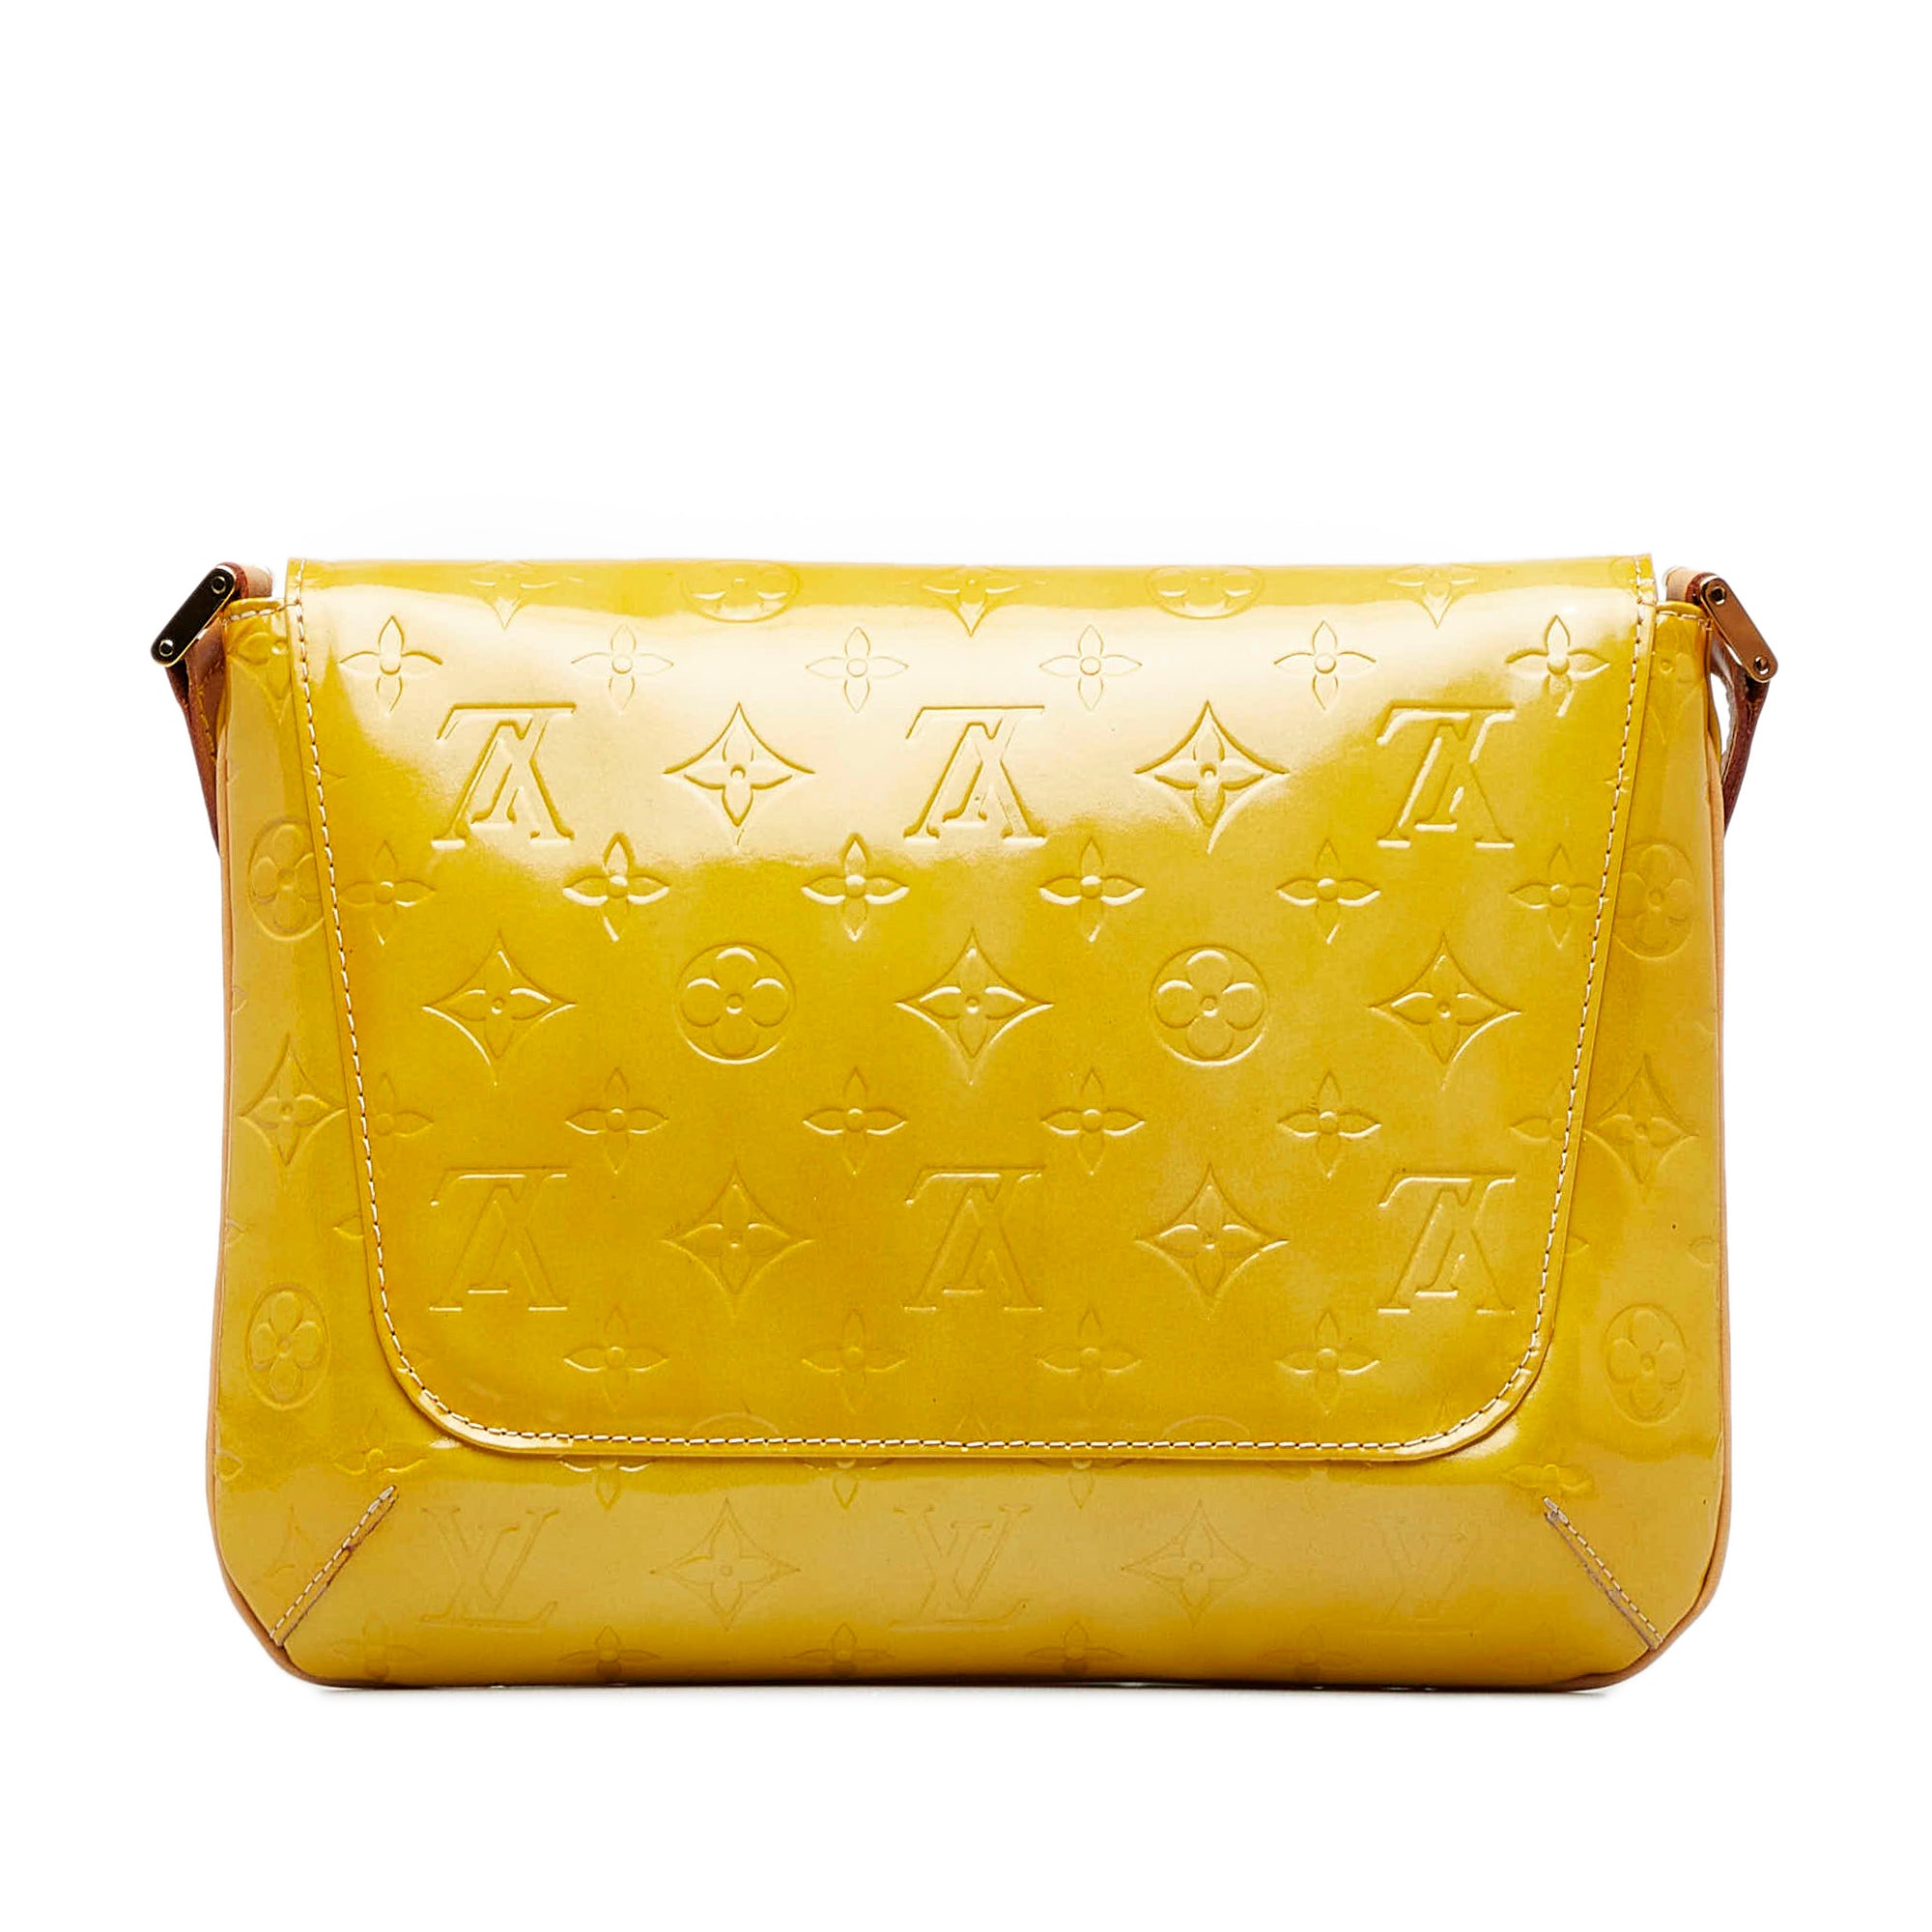 Vintage Louis Vuitton Monogram Square Cosmetics Bag